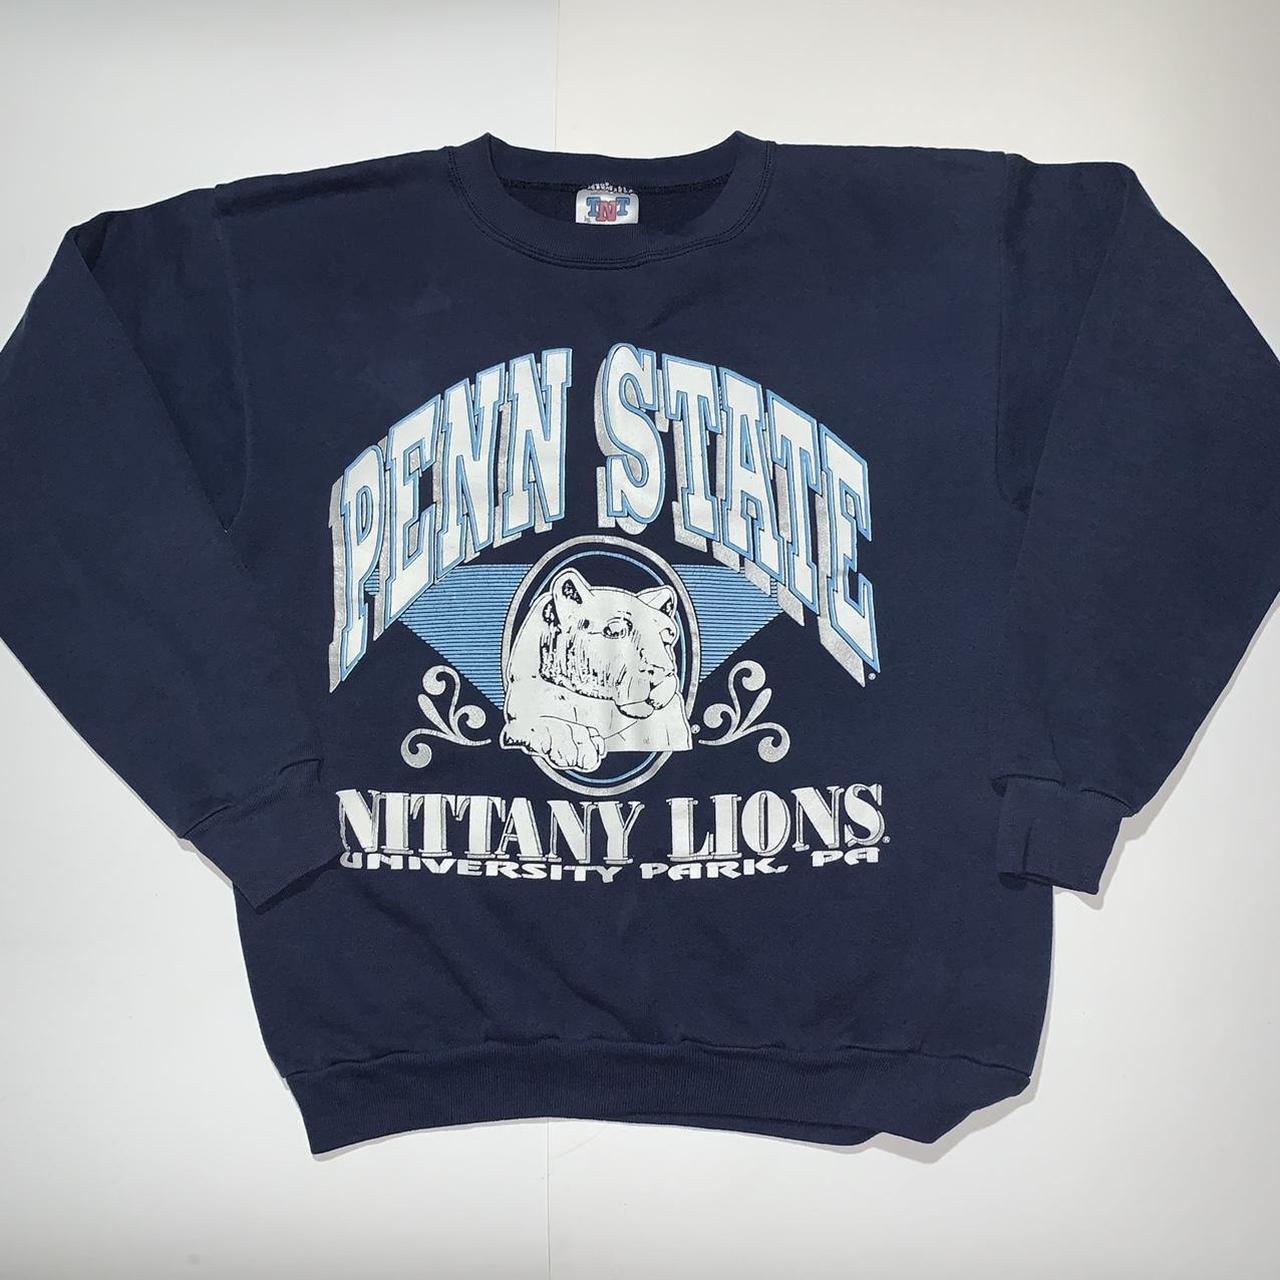 Vintage Penn State University sweater size large. In... - Depop